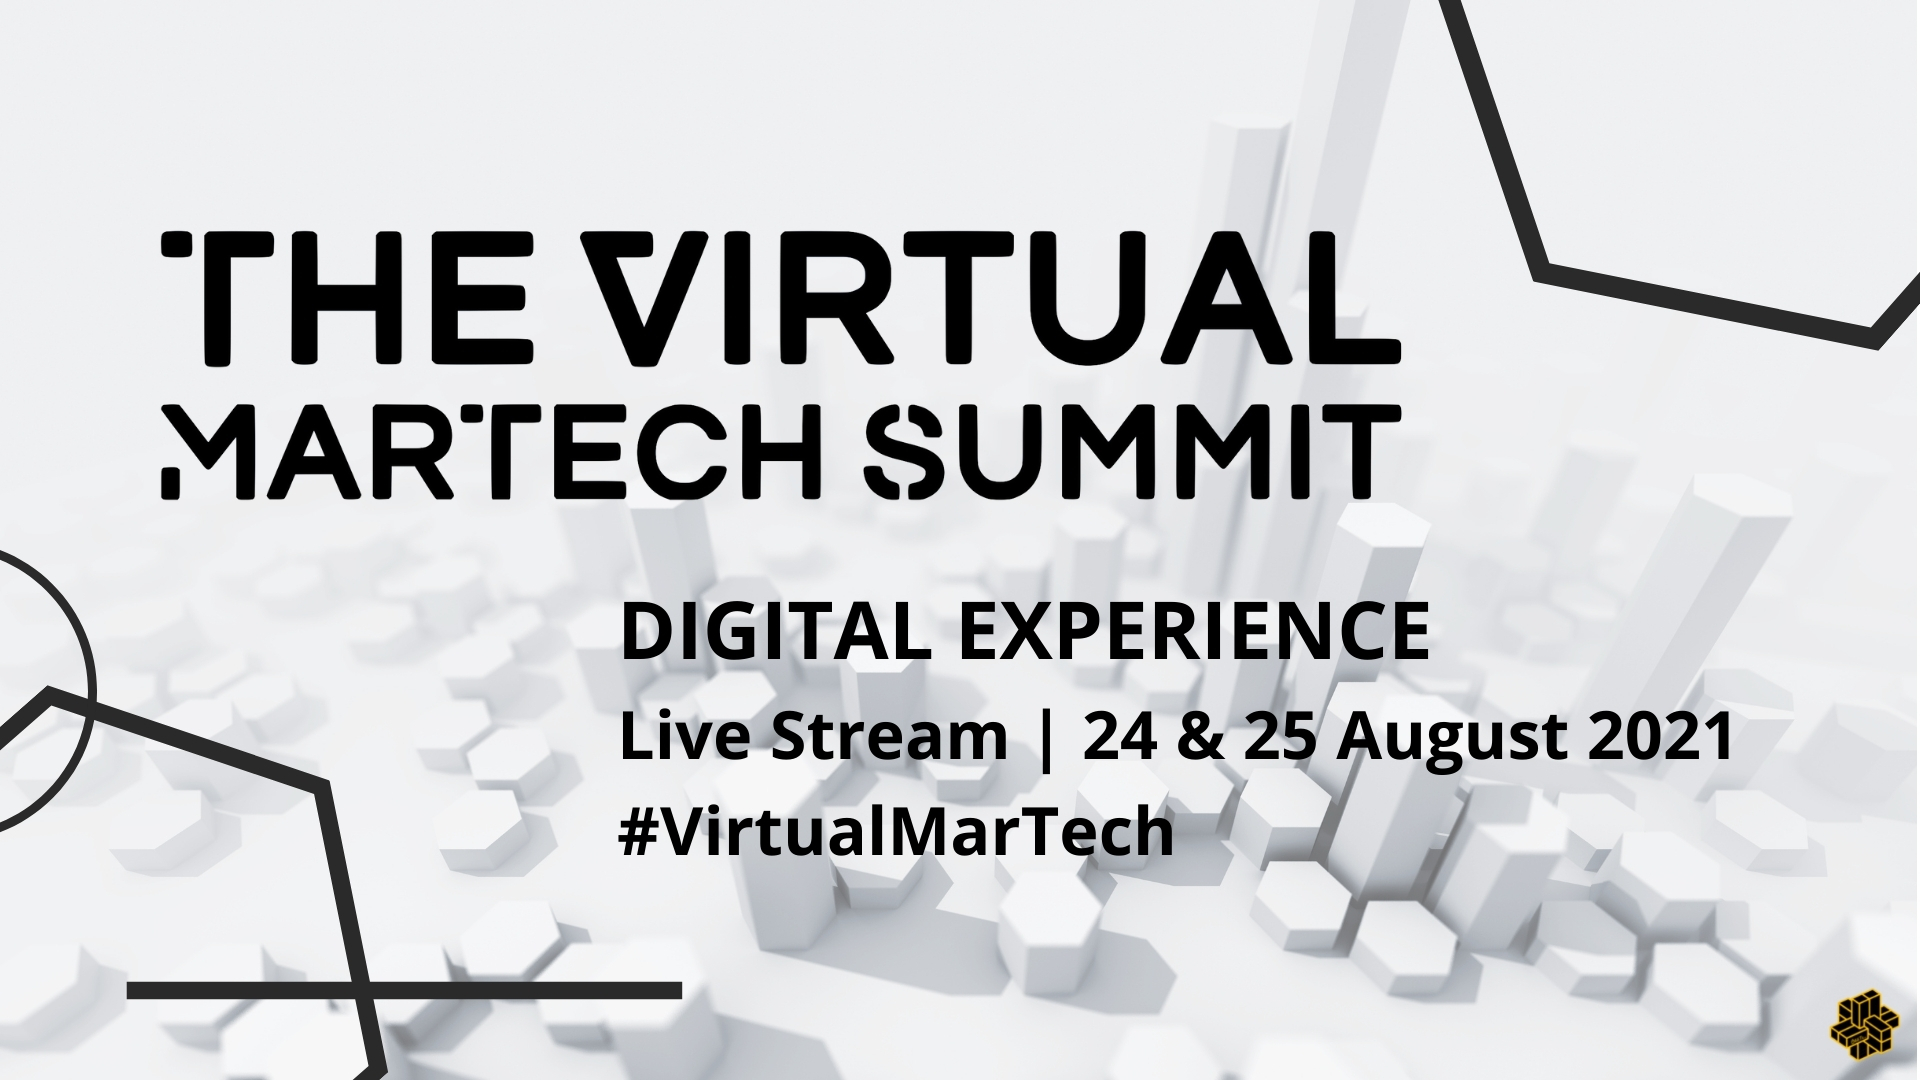 The Virtual MarTech Summit APAC organized by BEETc